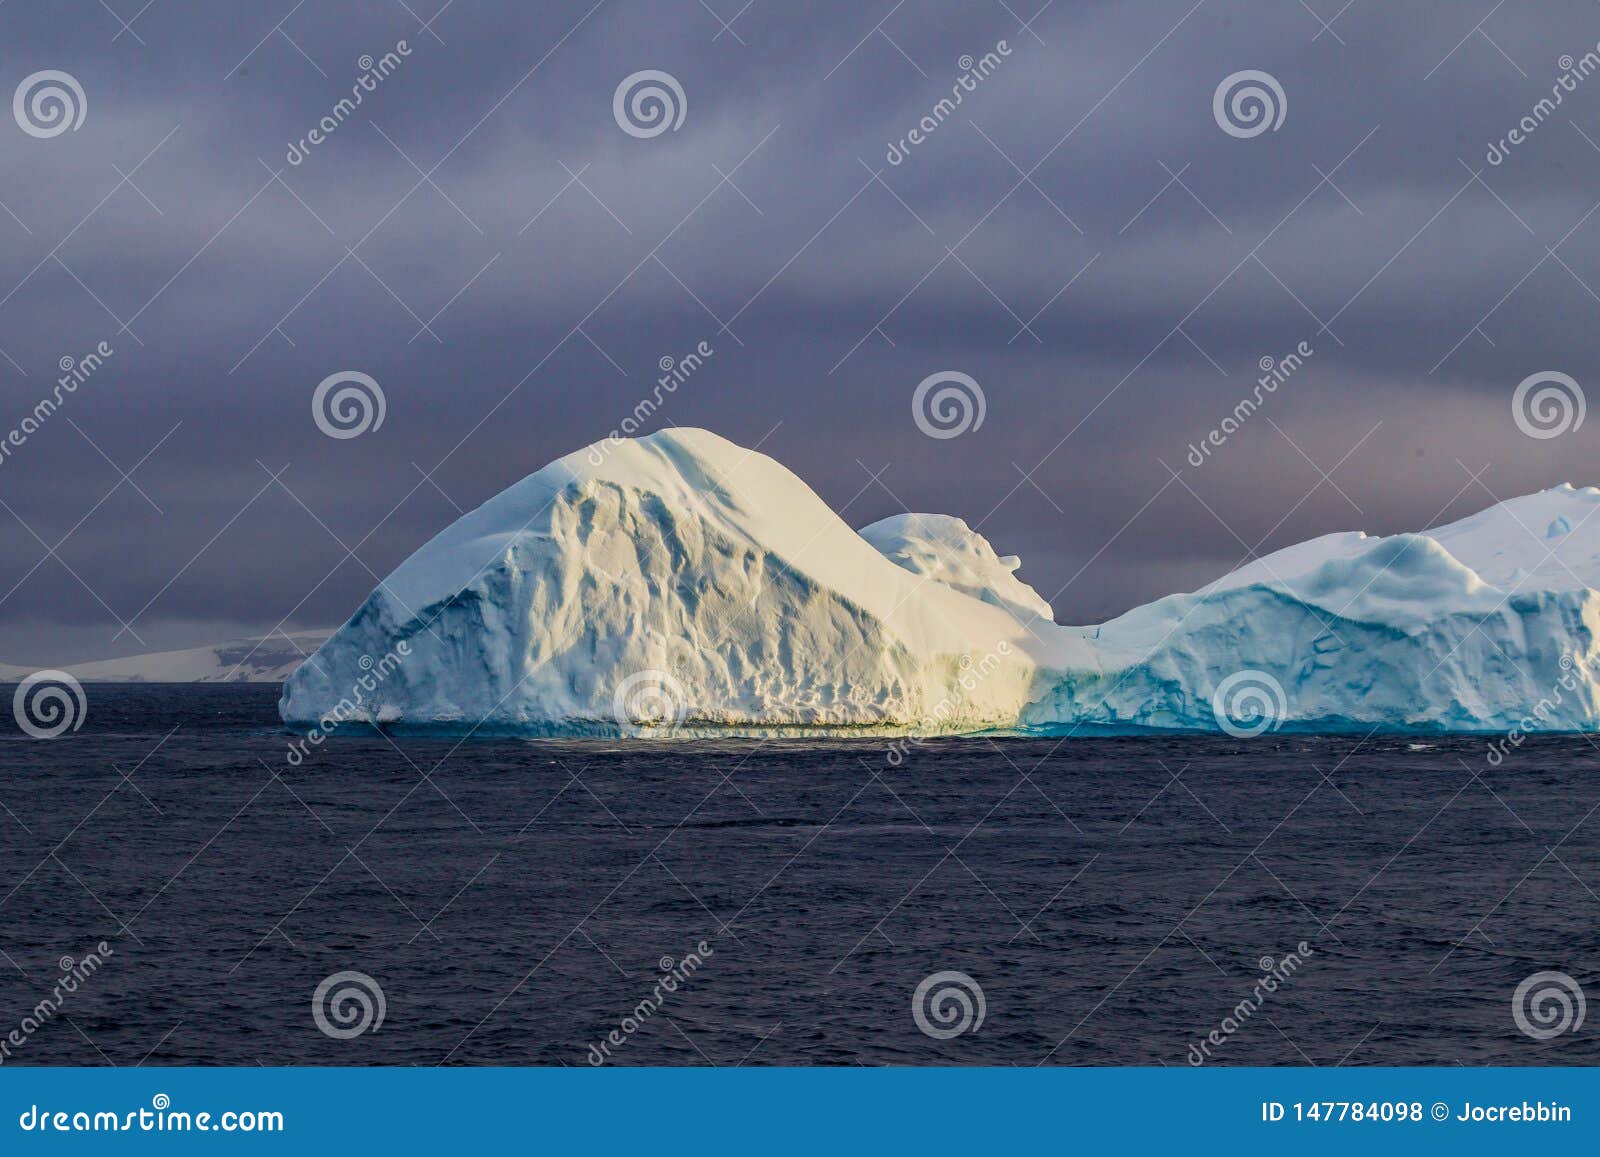 icebergs float dangerously near antarctica